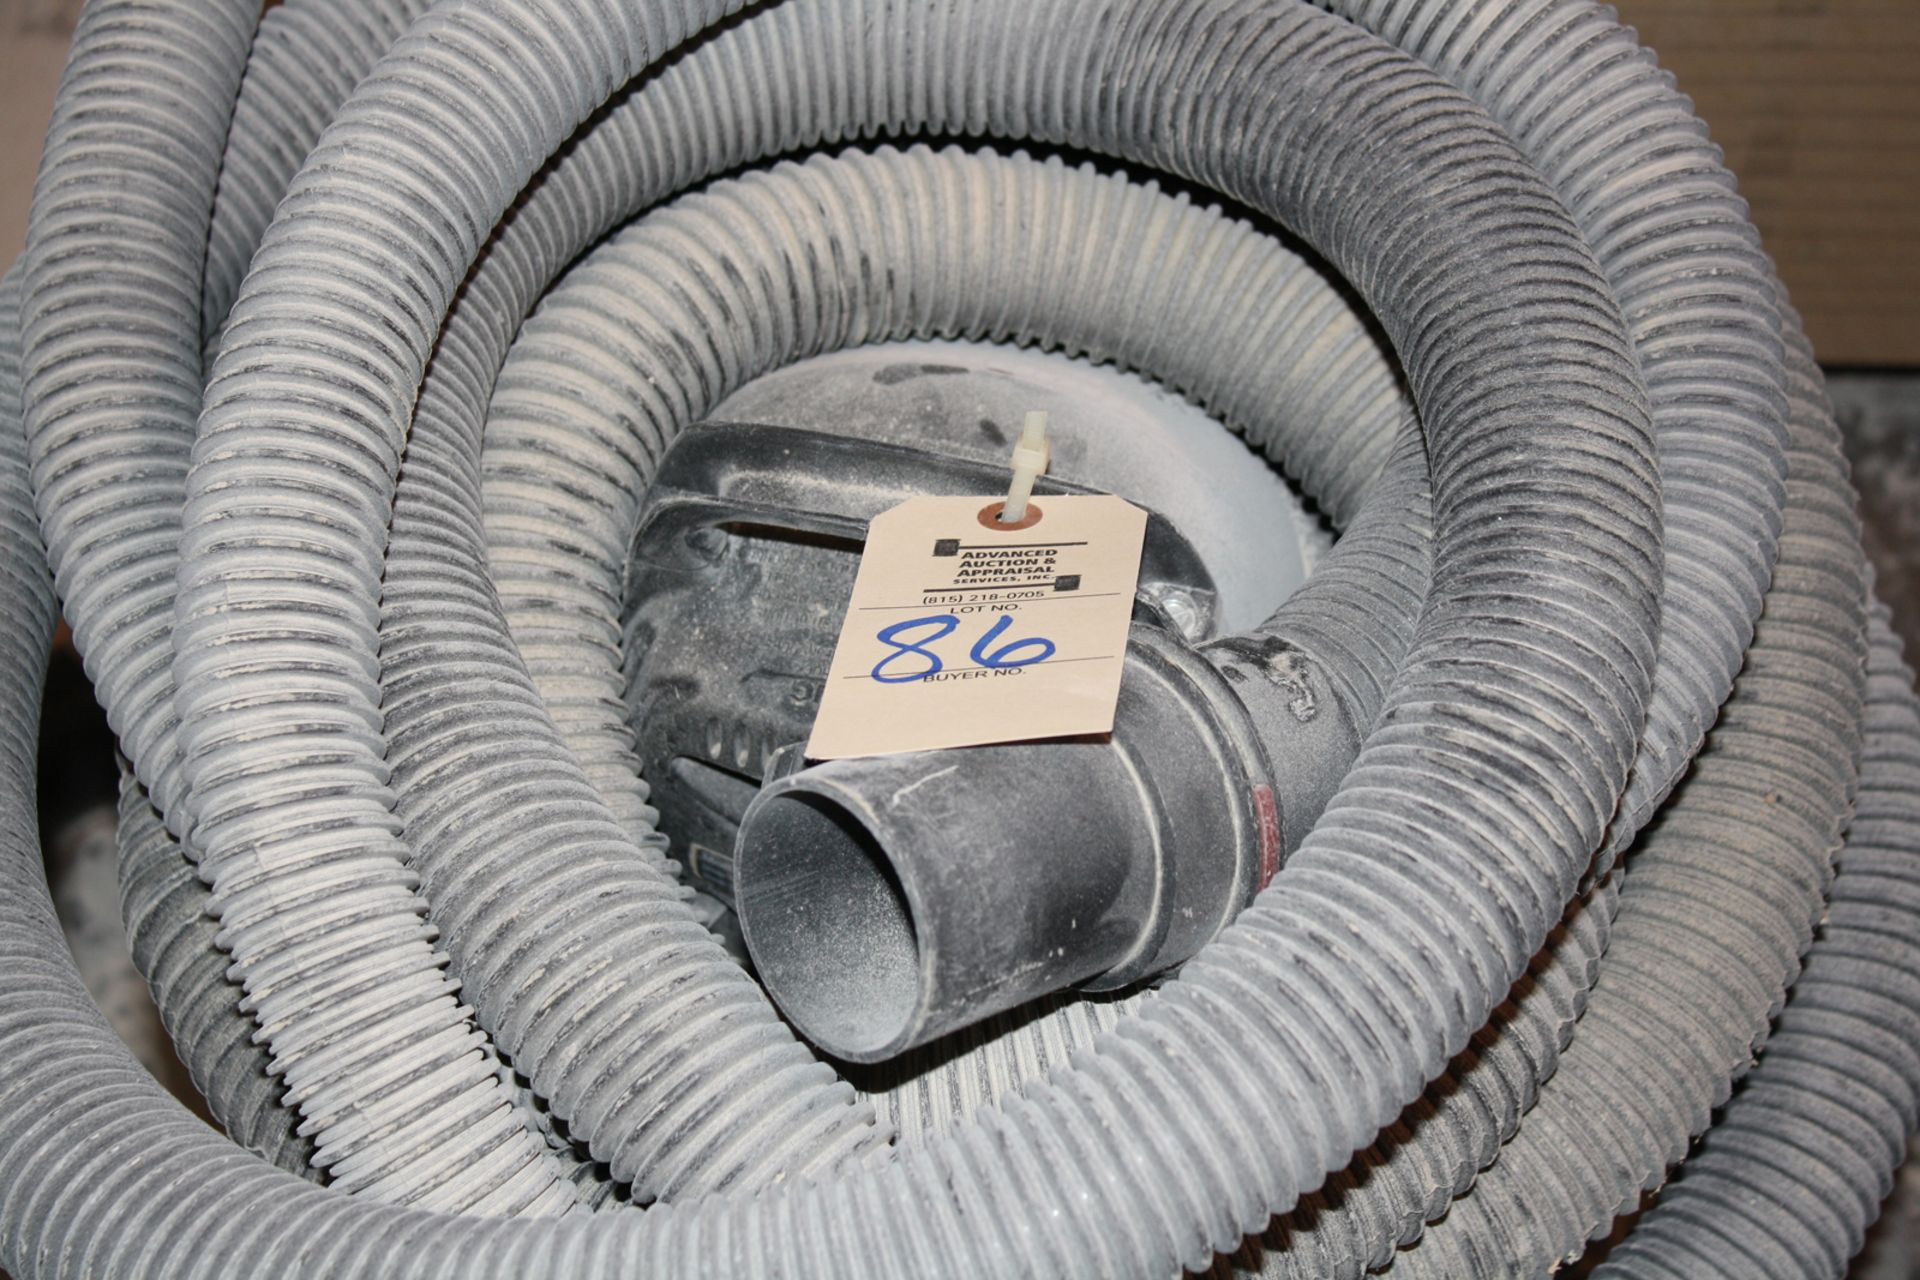 8 Gallon Shop Vac and hoses